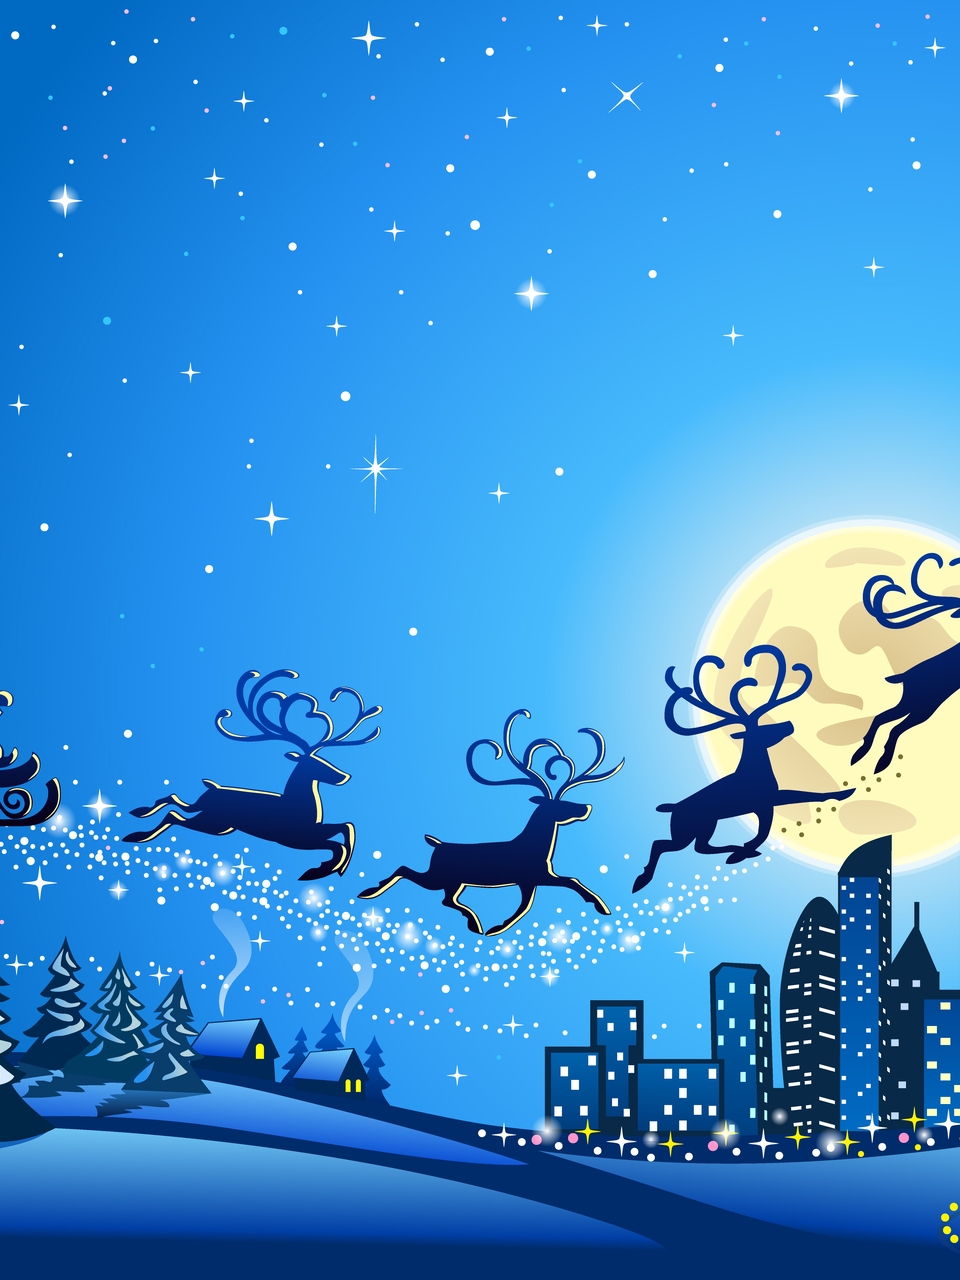 Image: Santa Claus, reindeer, sleigh, night, moon, winter, christmas, city, trees